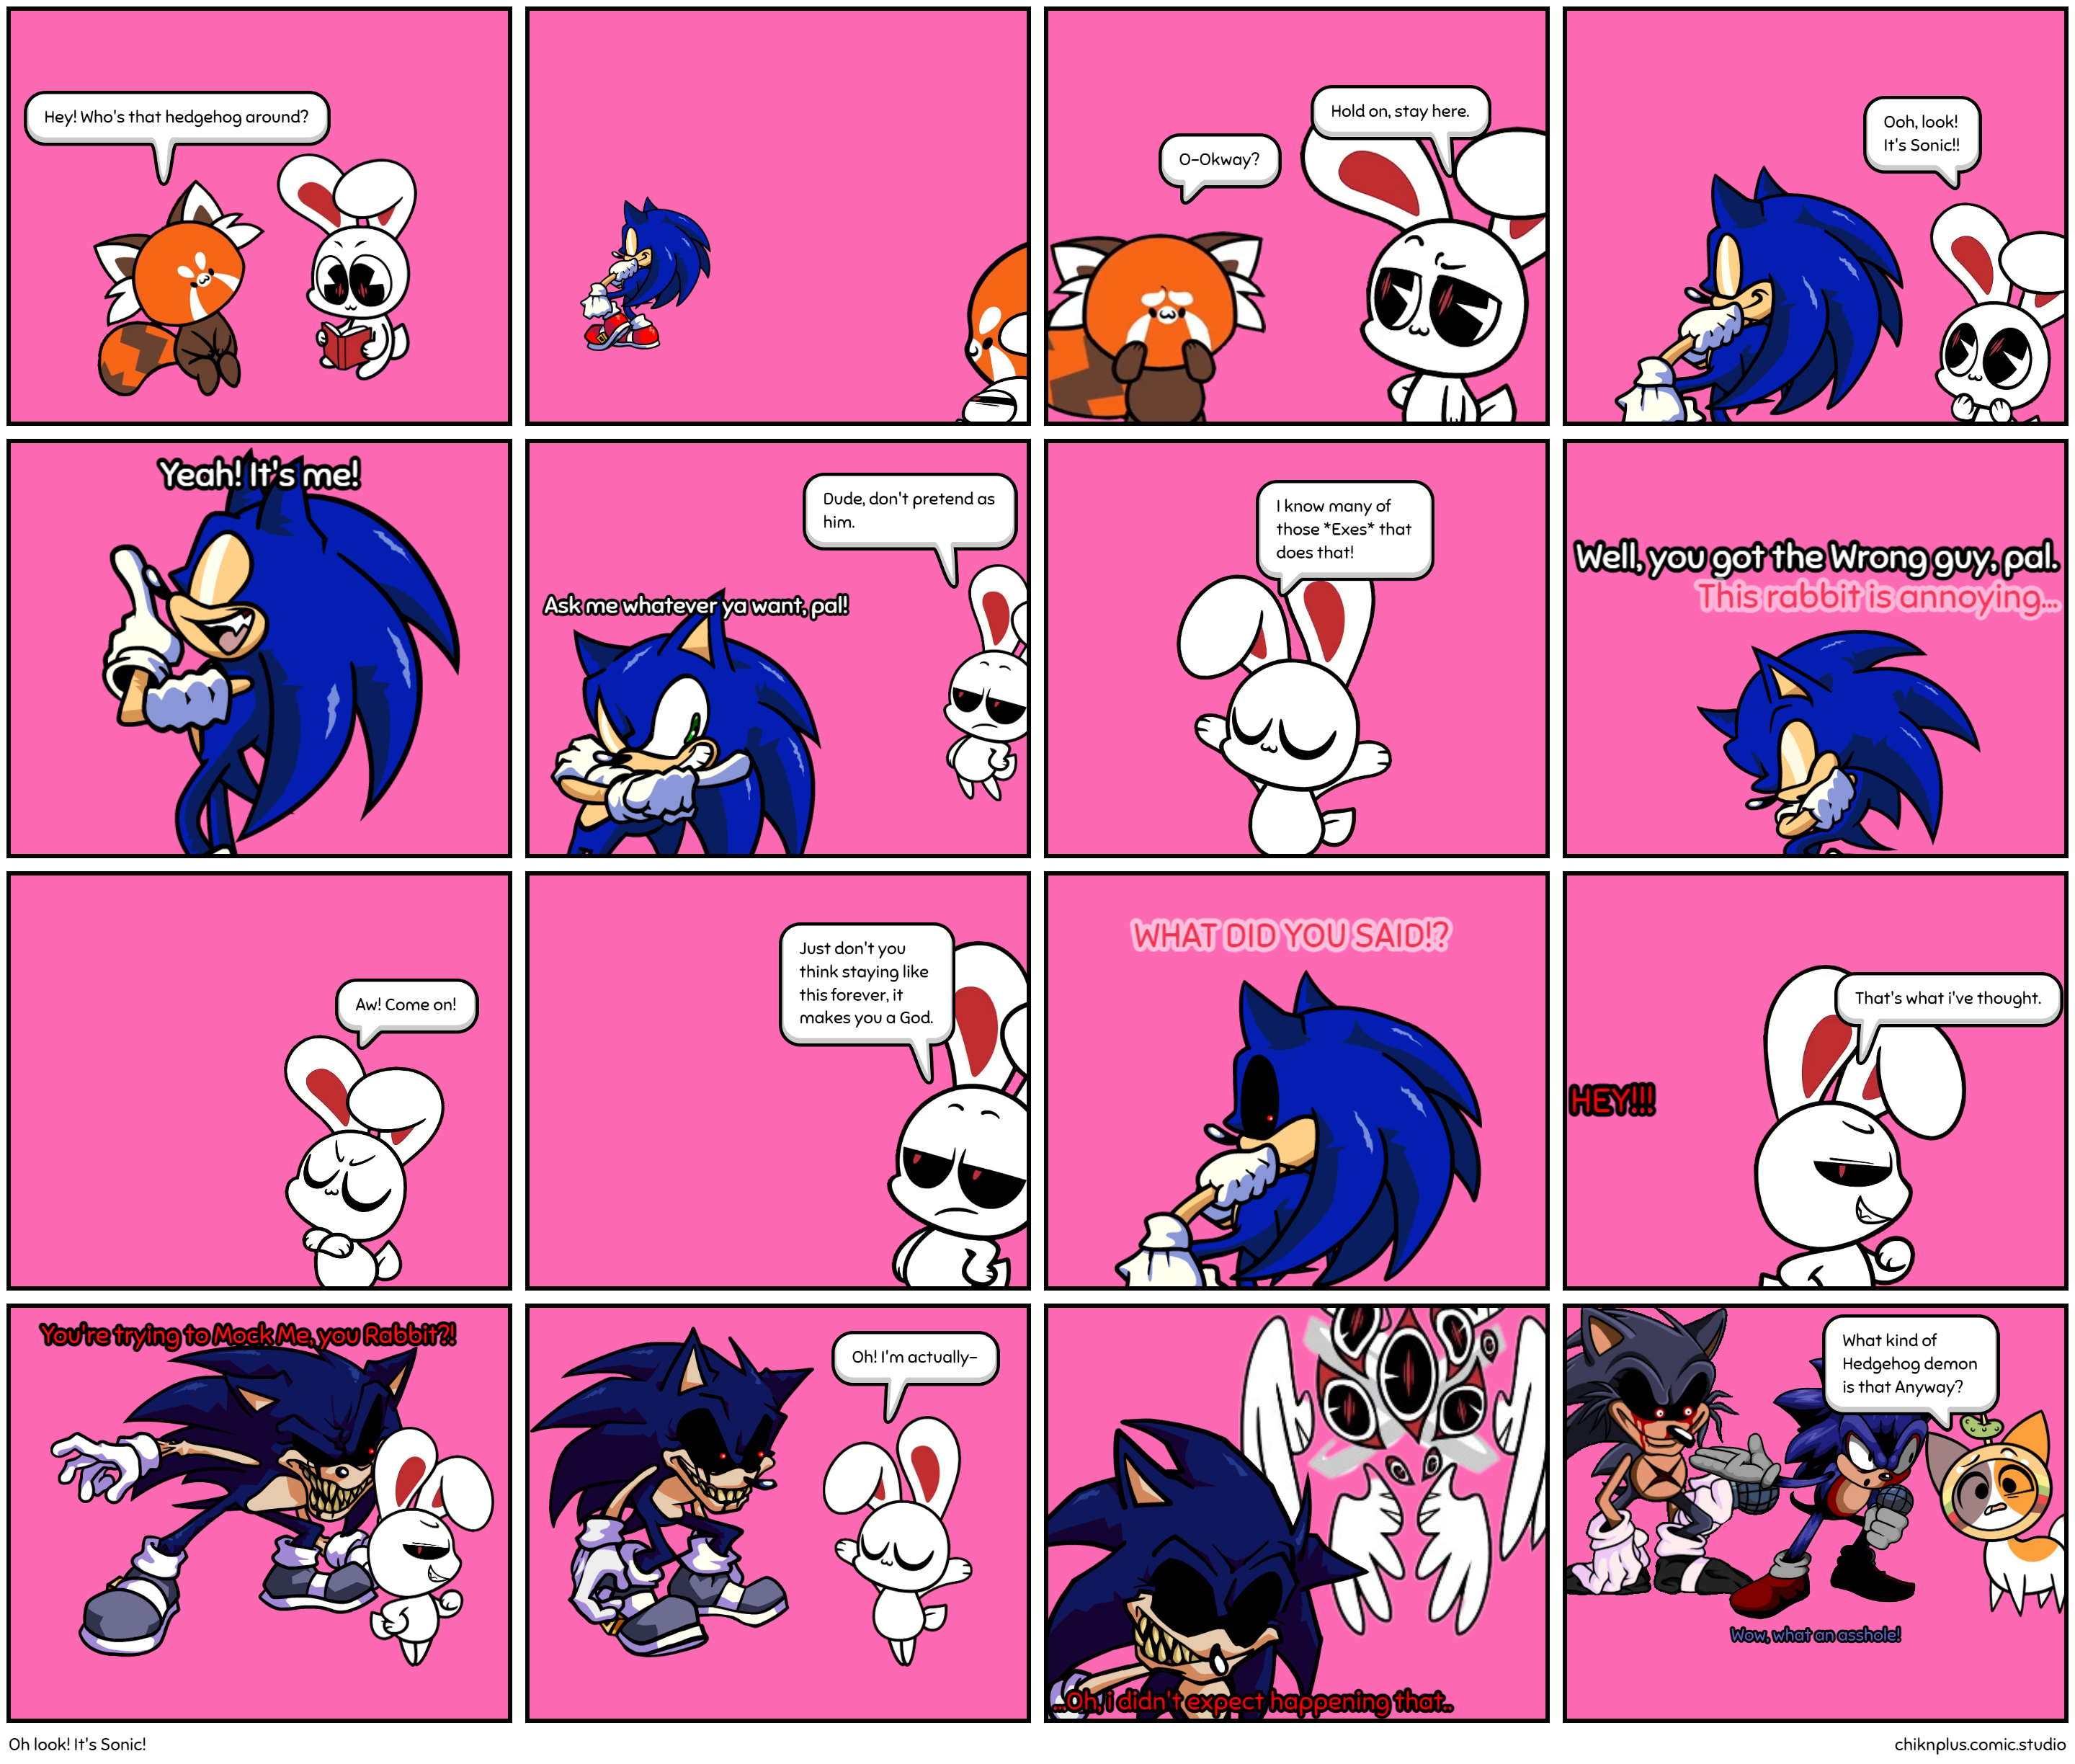 Oh look! It's Sonic!